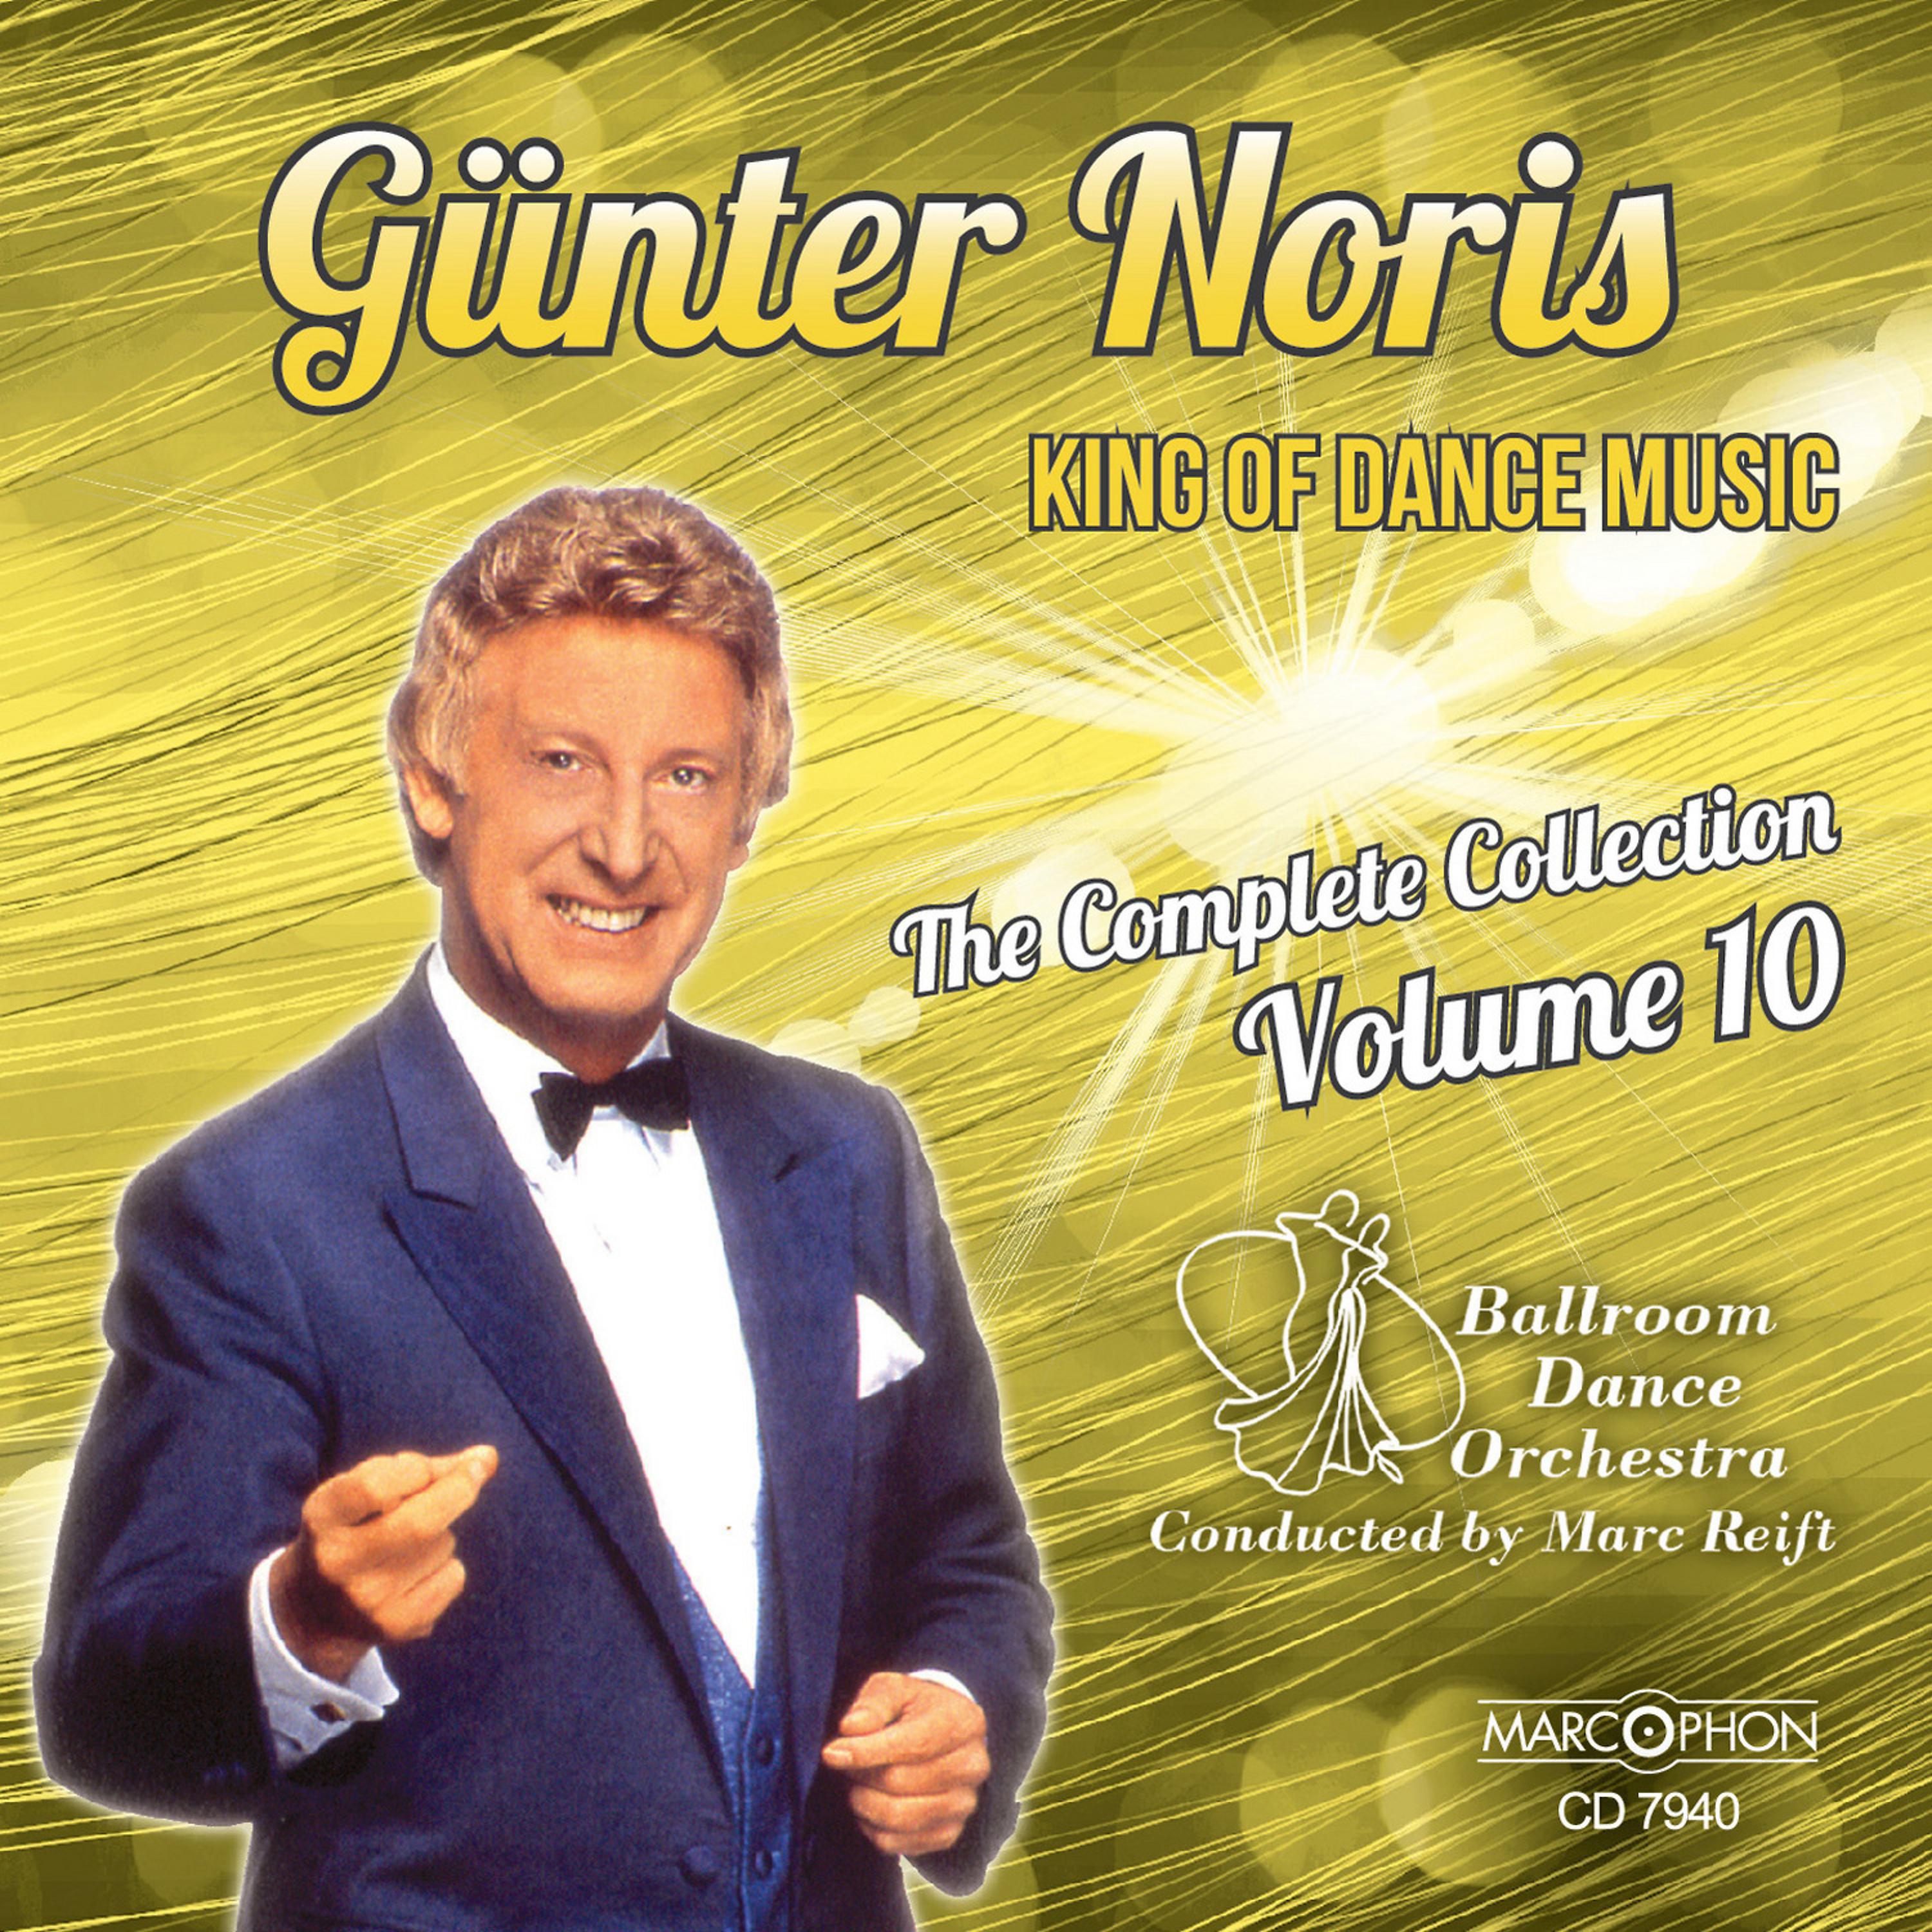 Постер альбома Günter Noris "King of Dance Music" The Complete Collection Volume 10